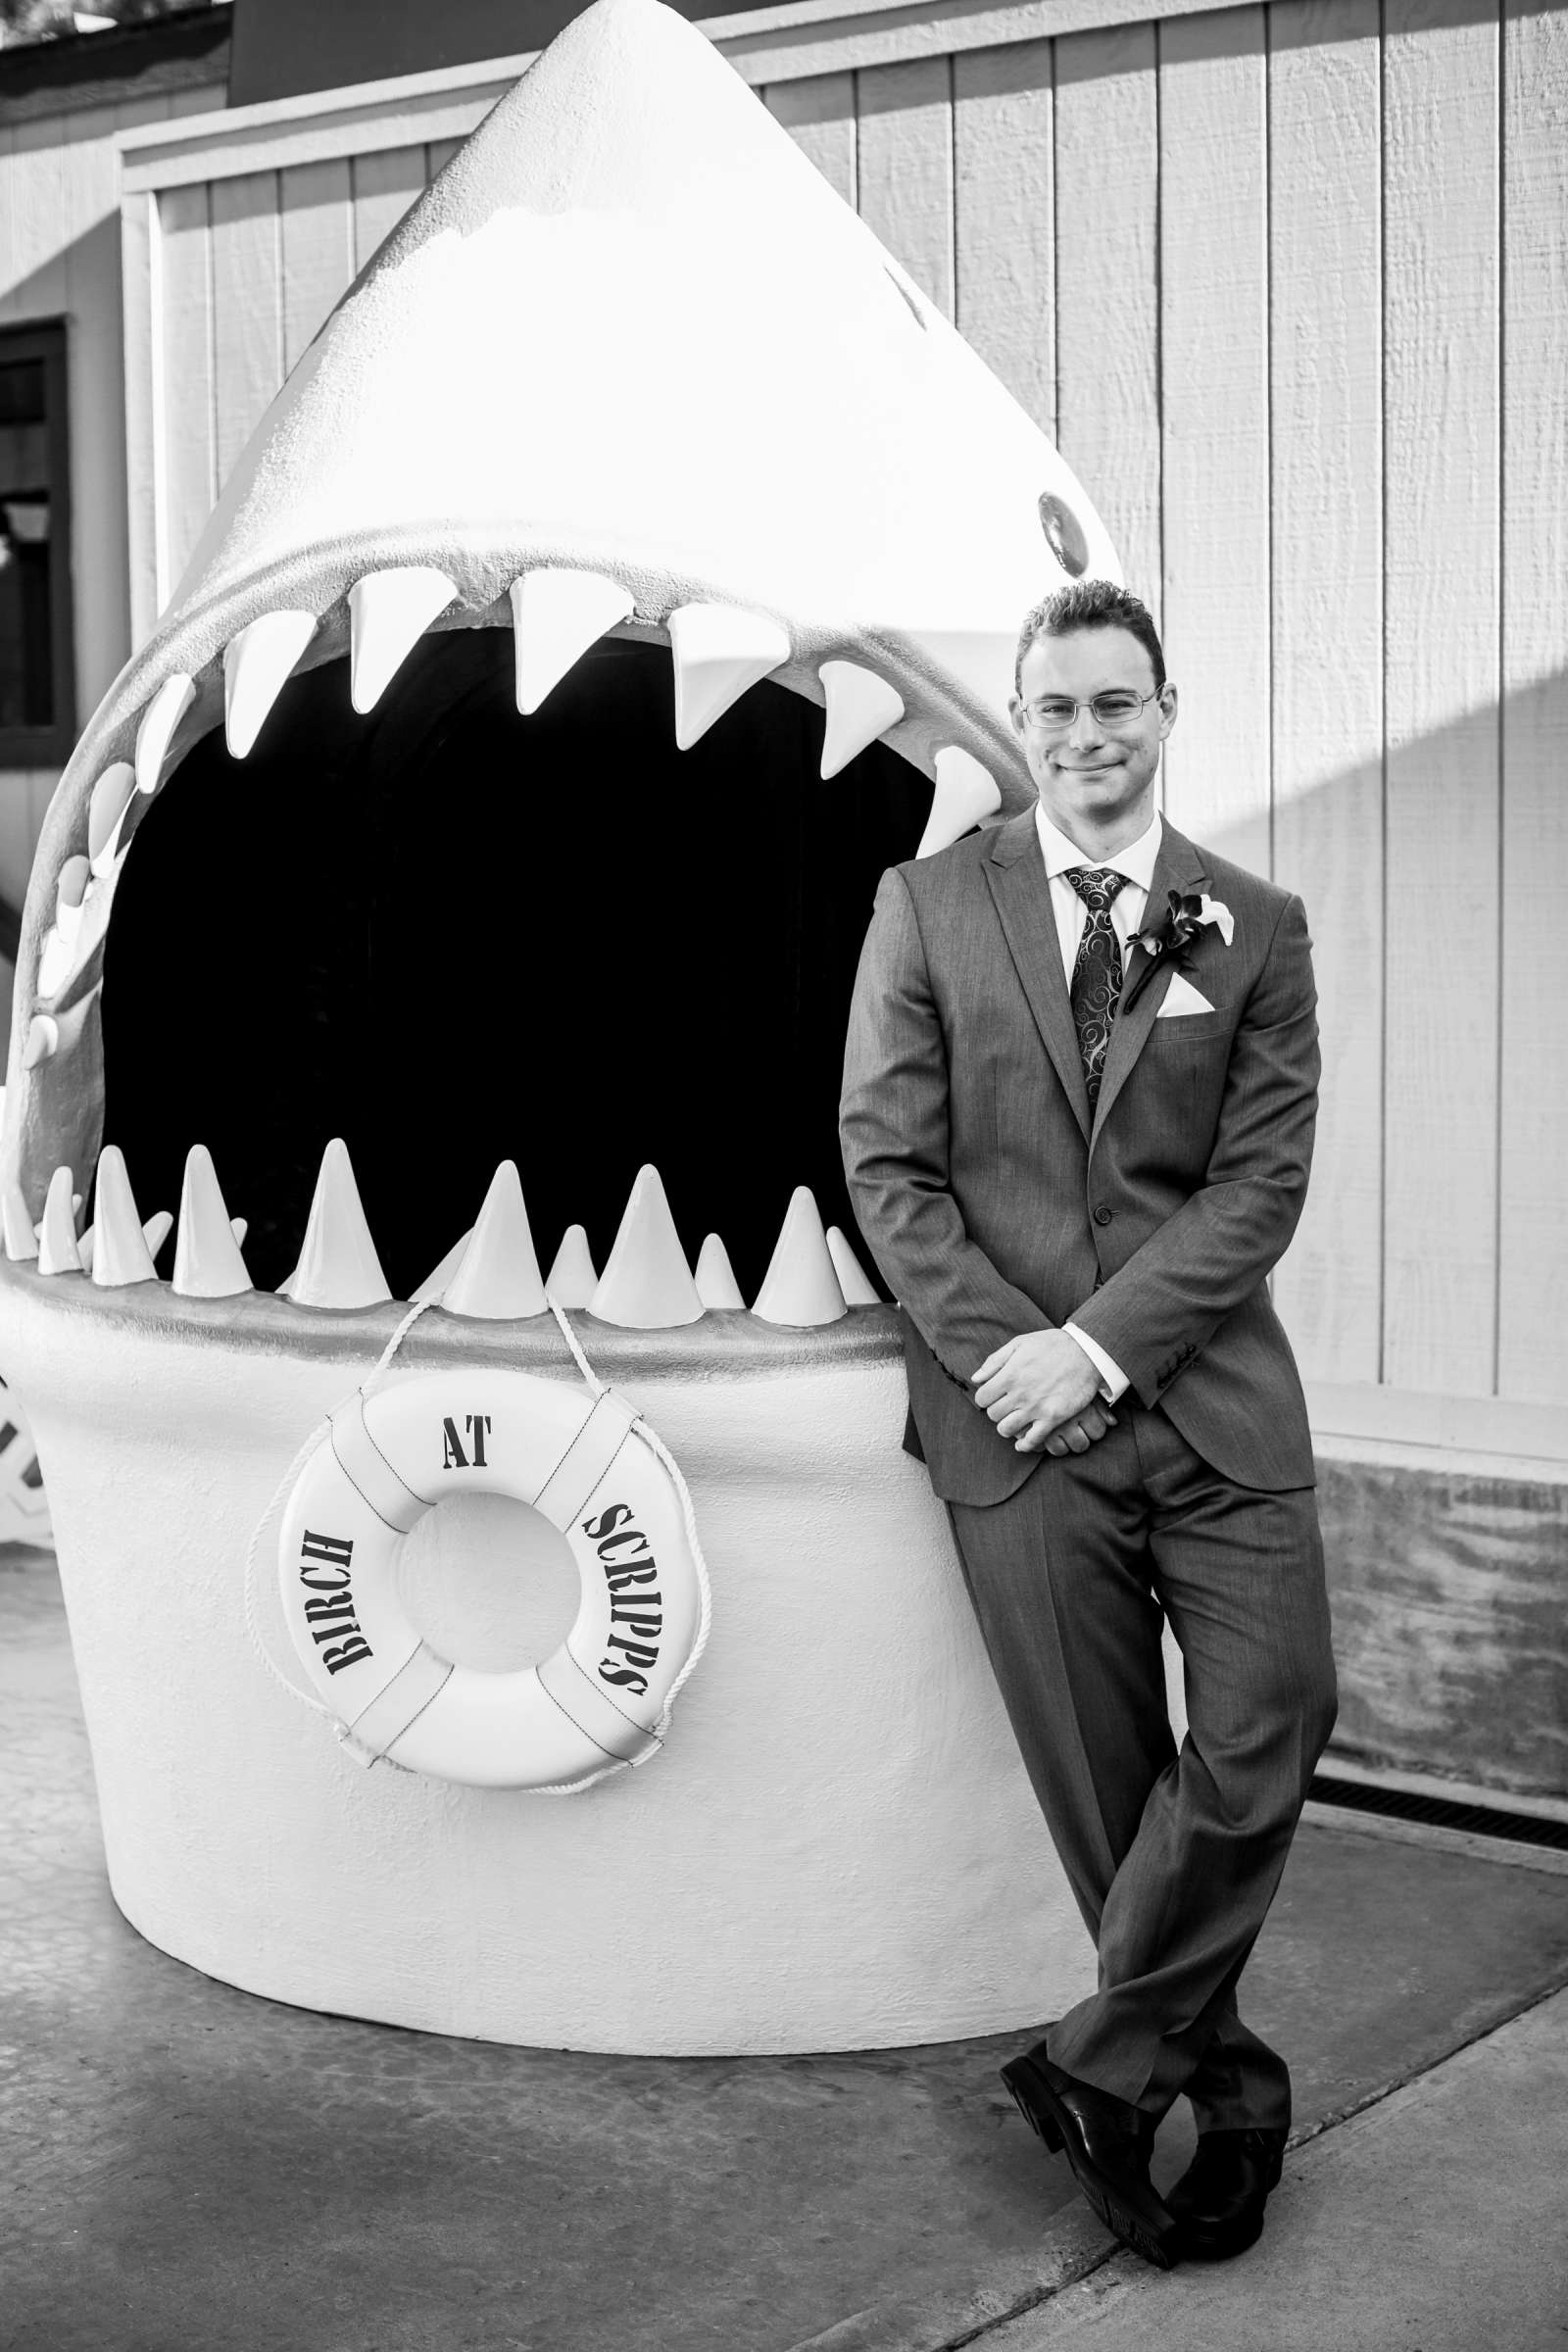 Birch Aquarium at Scripps Wedding, Cami and Zane Wedding Photo #16 by True Photography